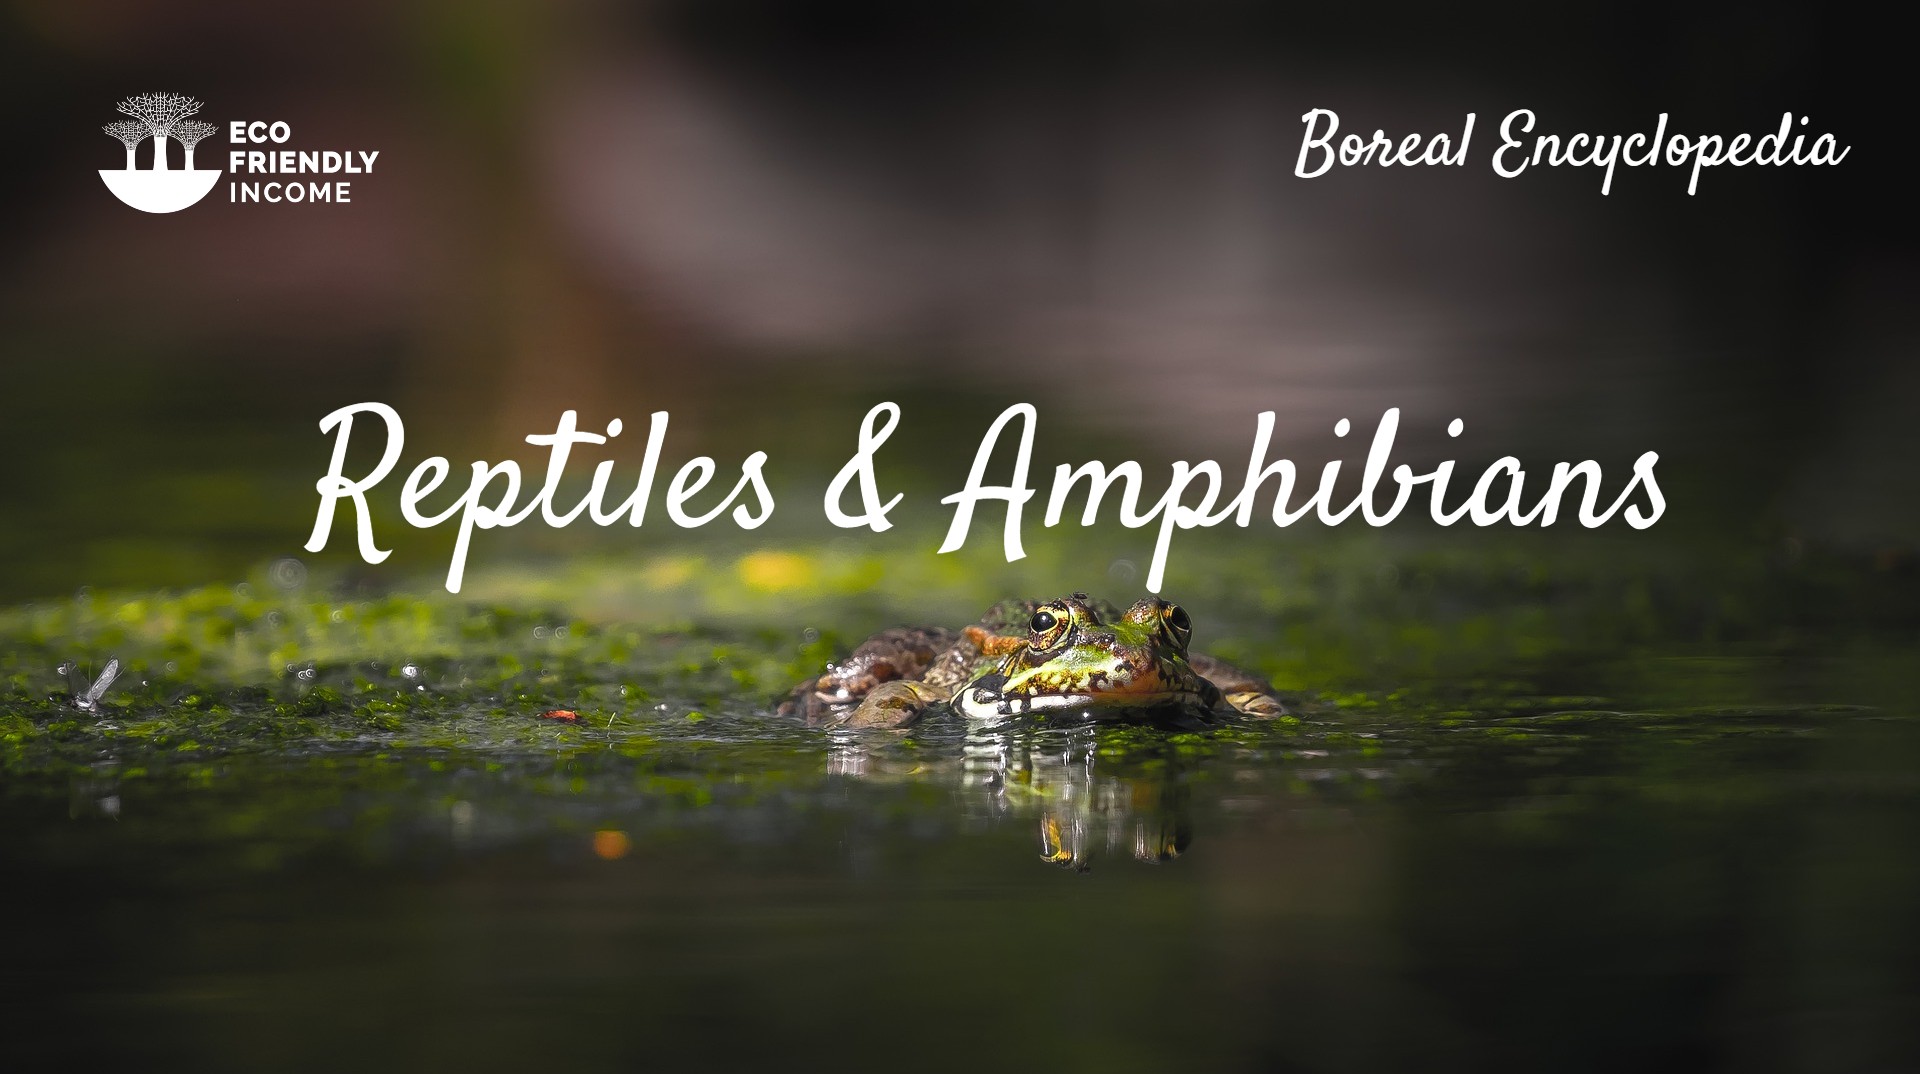 Boreal Encyclopedia Reptiles & Amphibians (2)